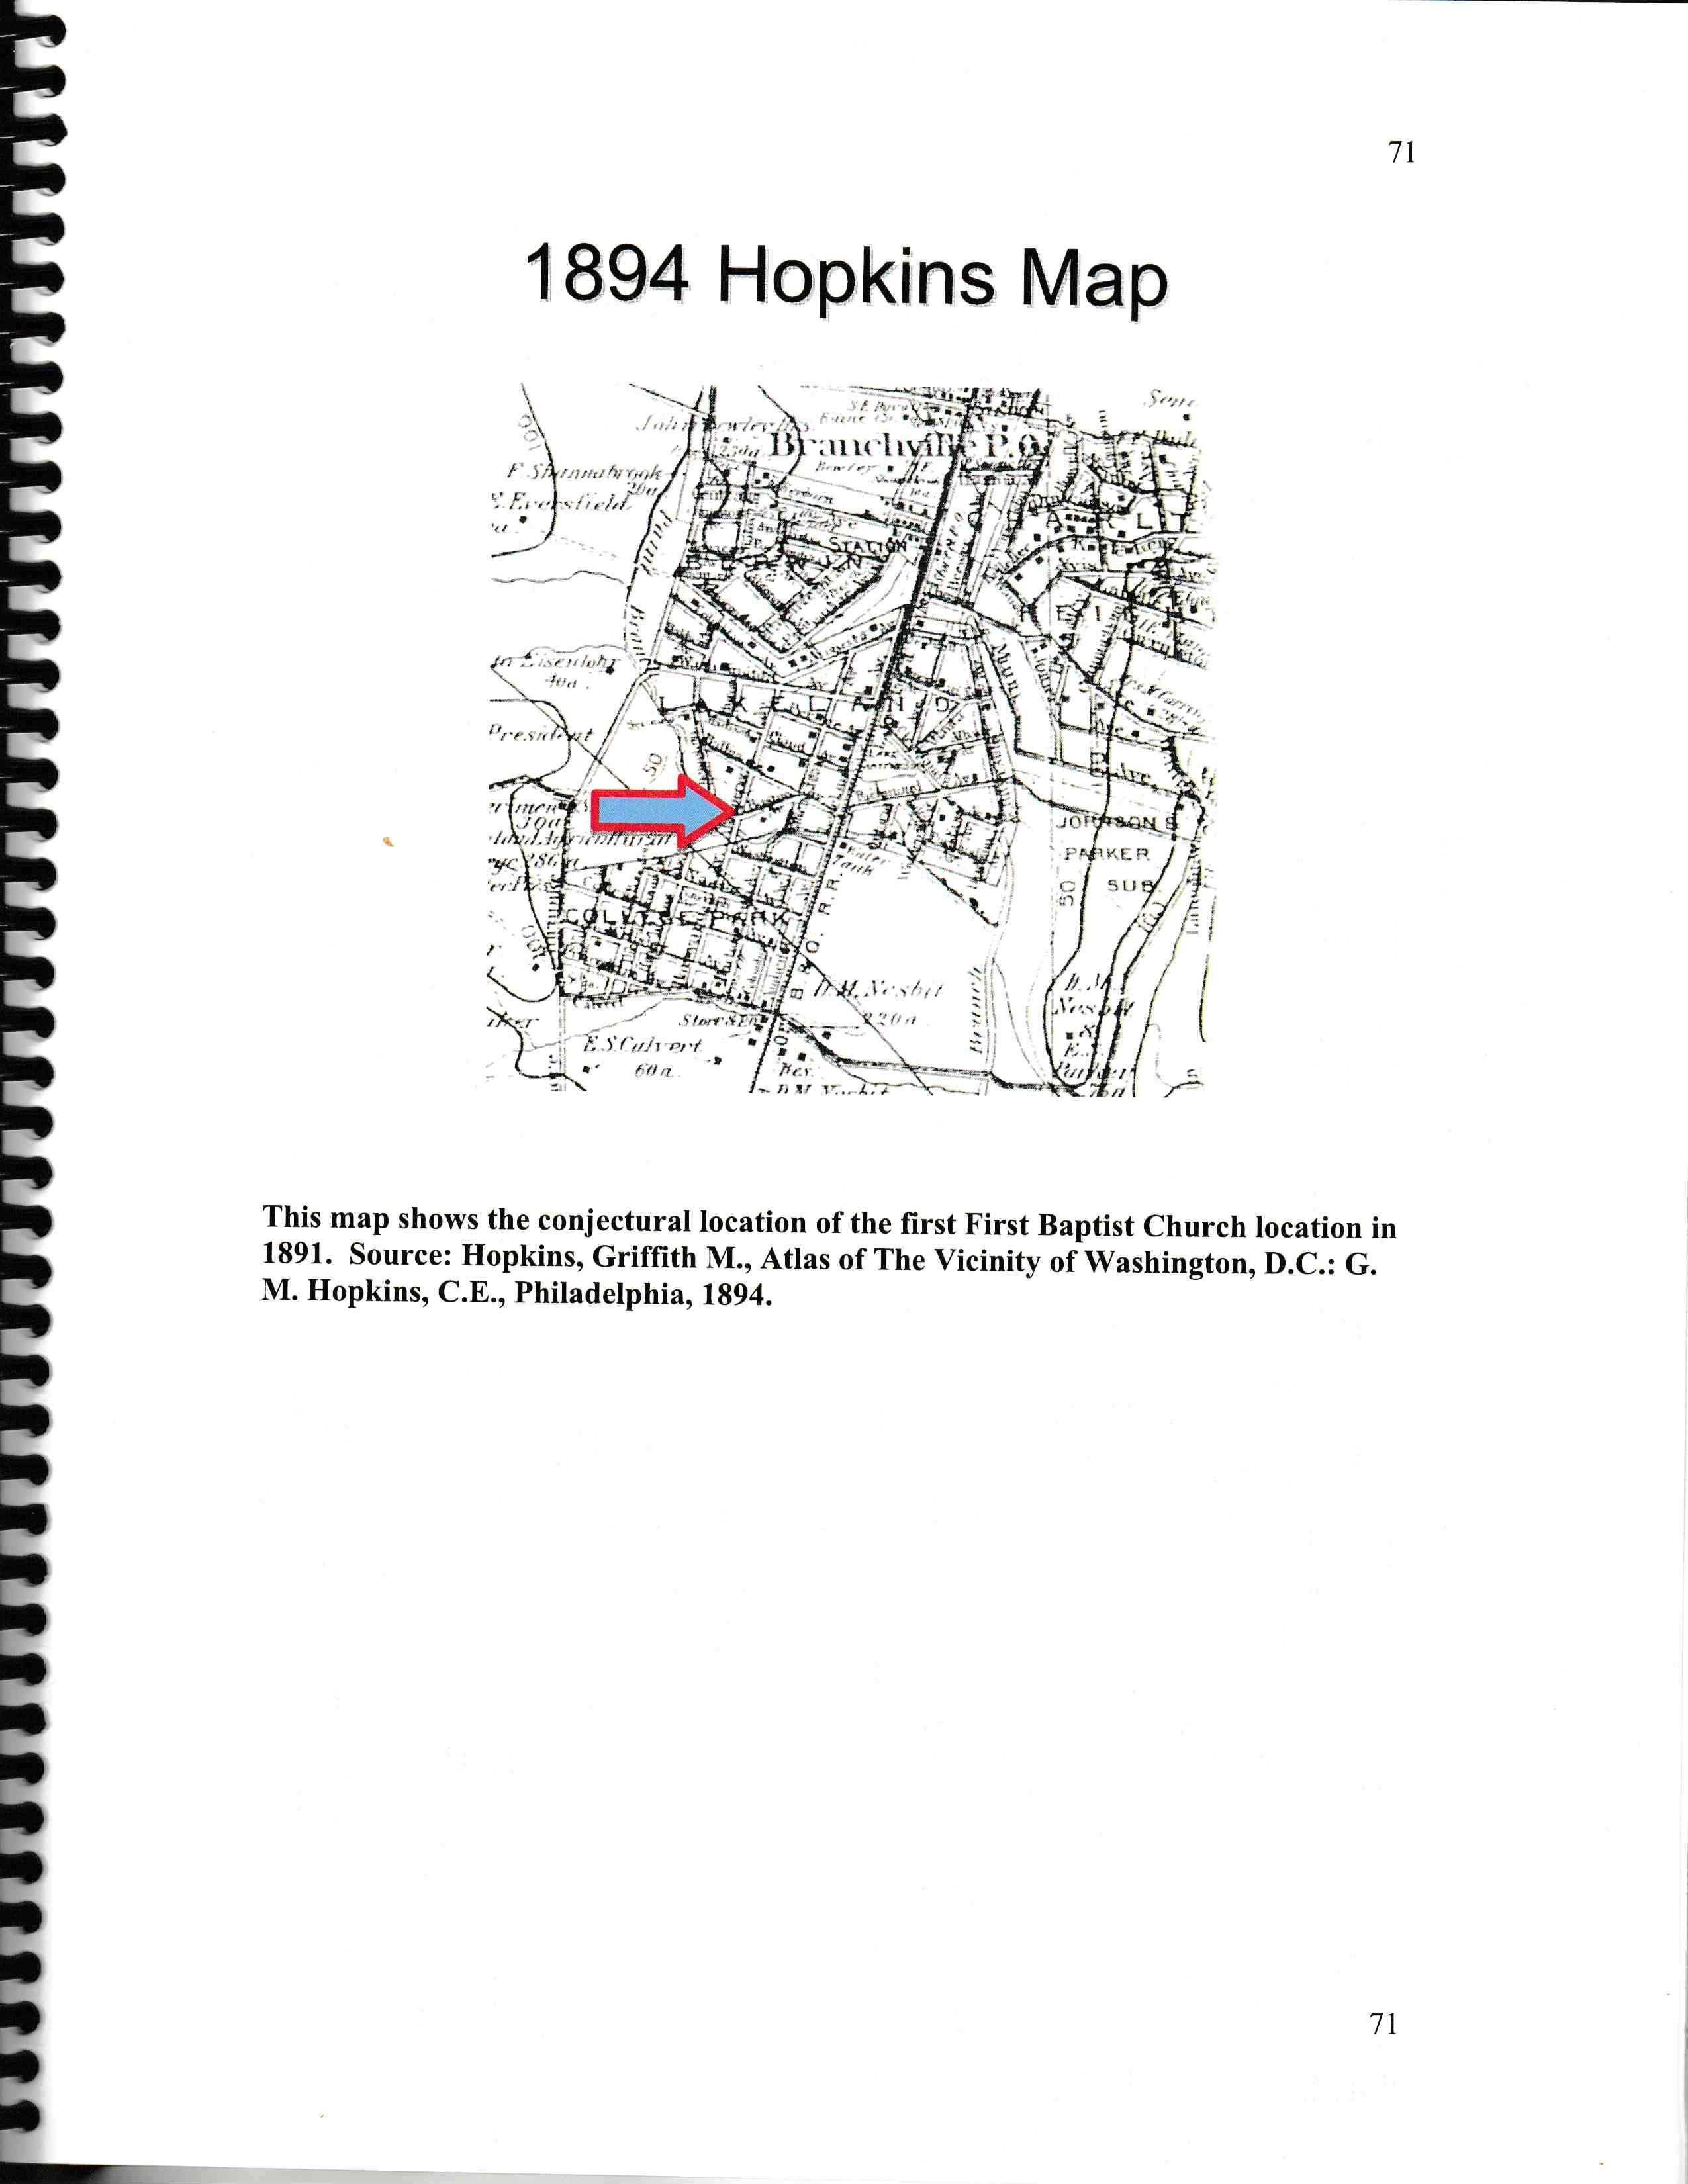 Hopkins Map Detail